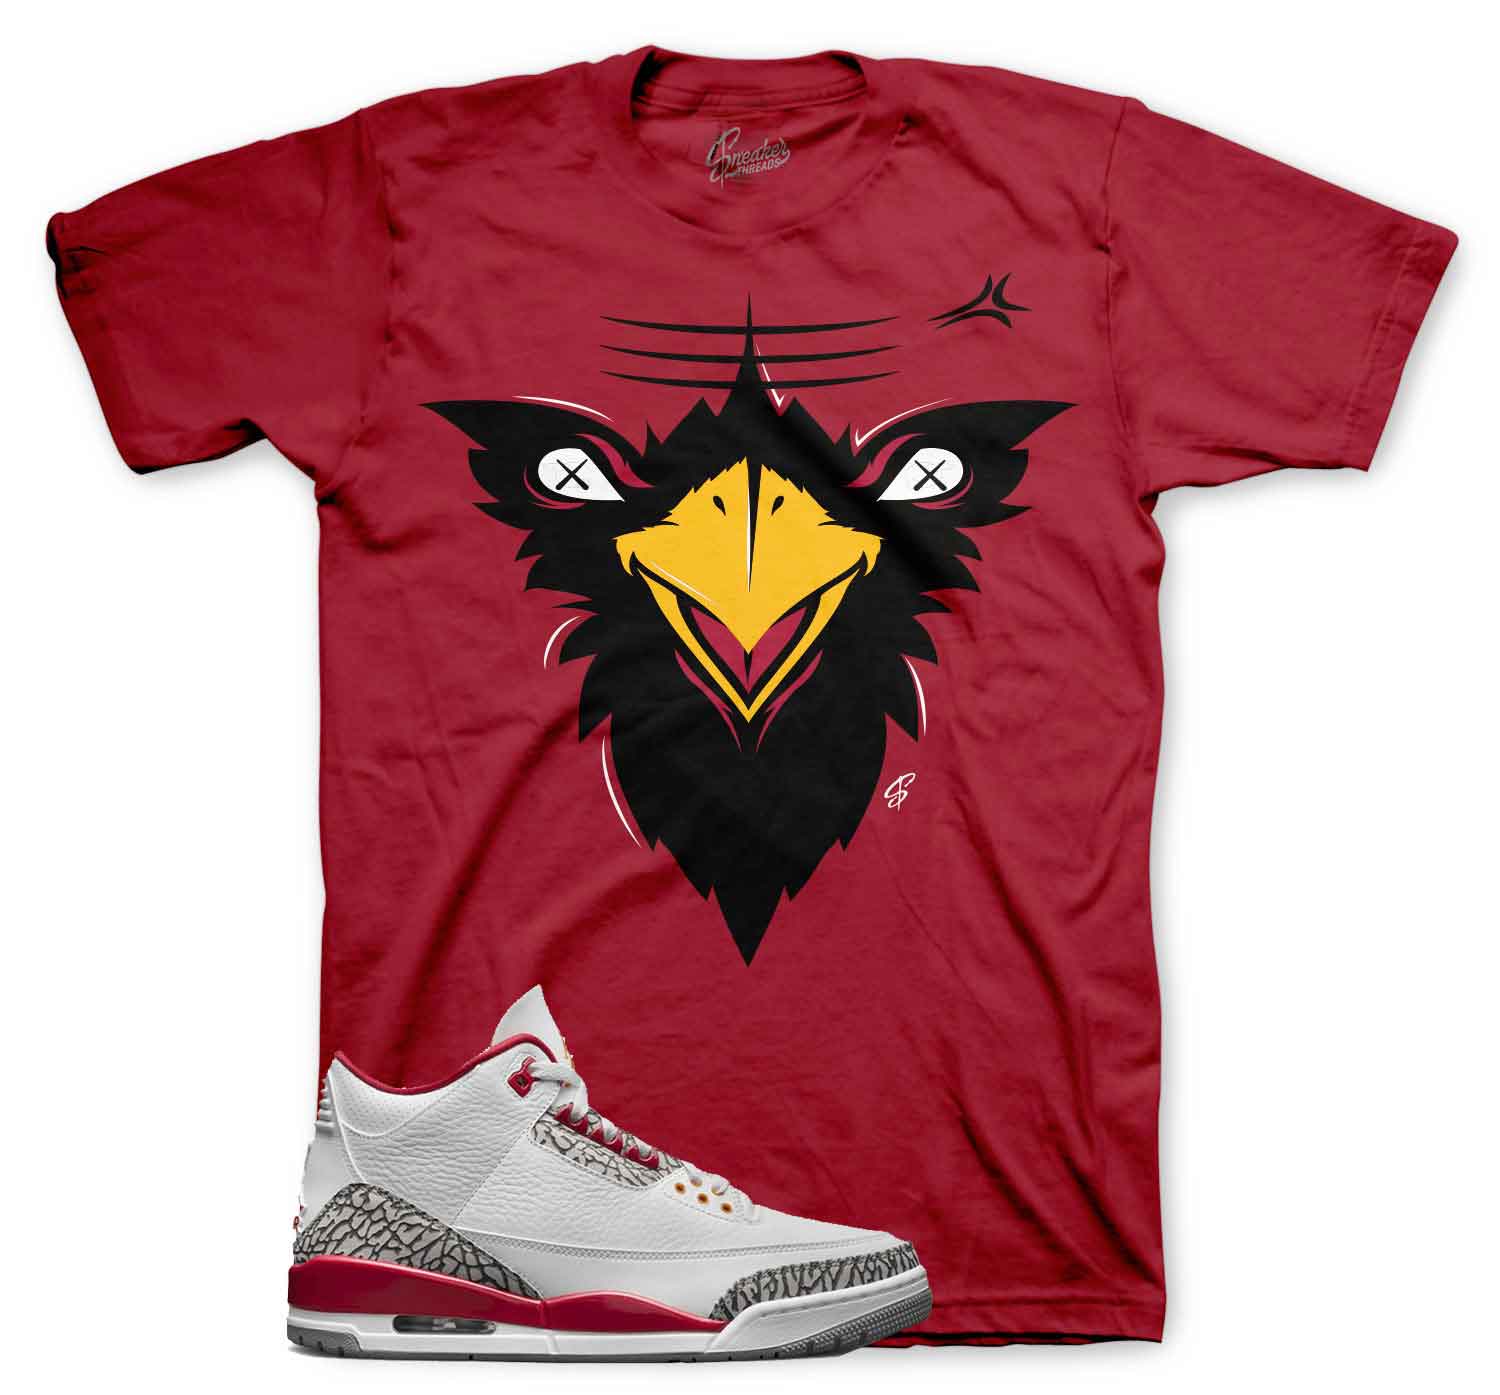 Jordan 3 cardinal red Sneaker tees